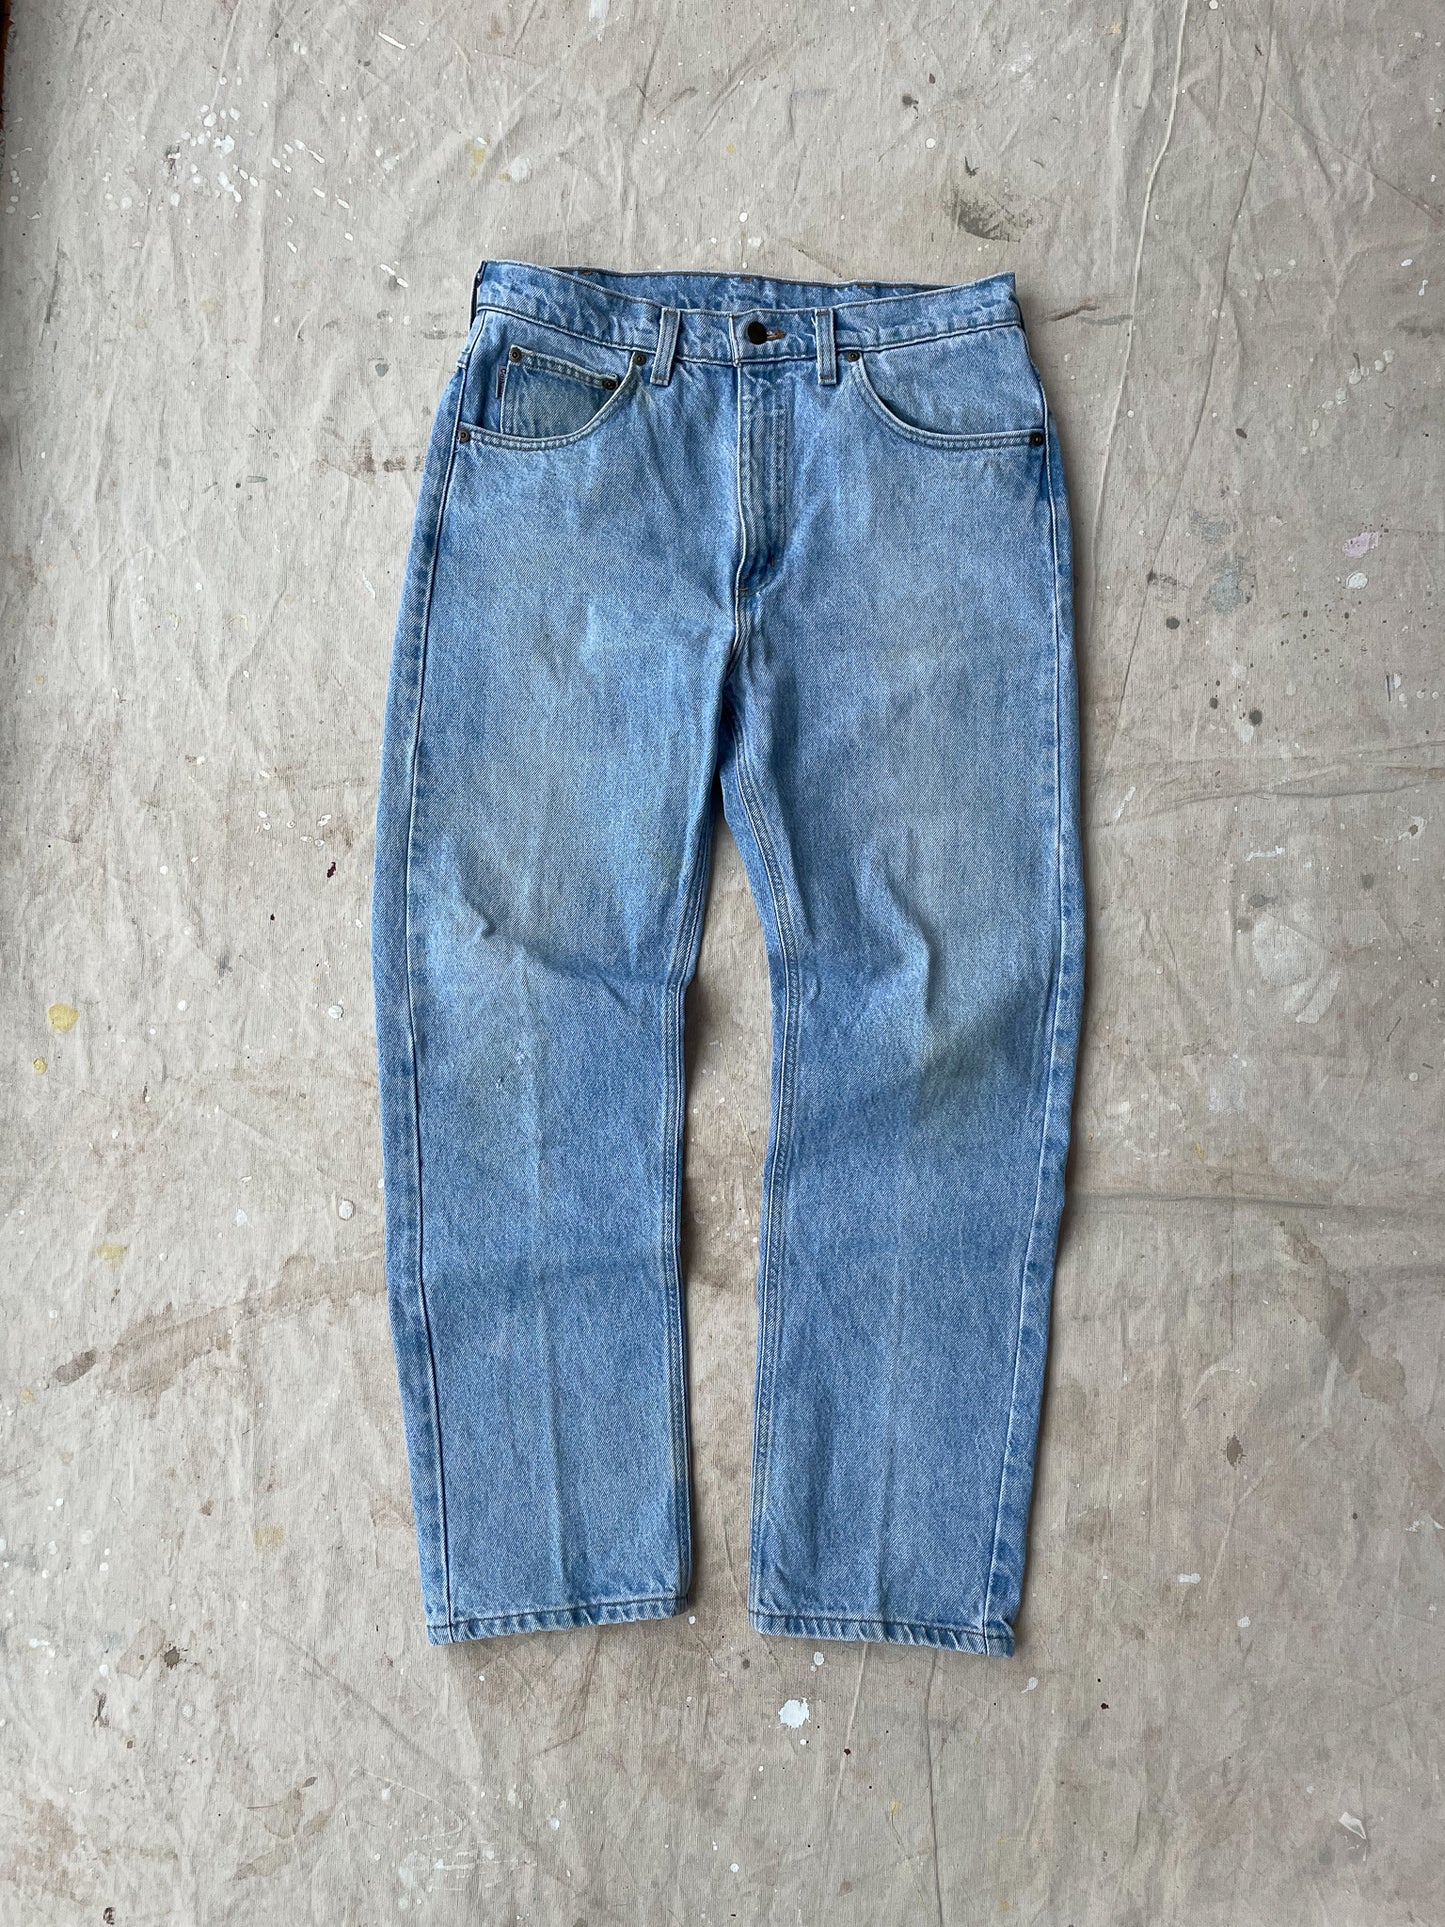 Carhartt Light Wash Blue Jeans—[34X30]